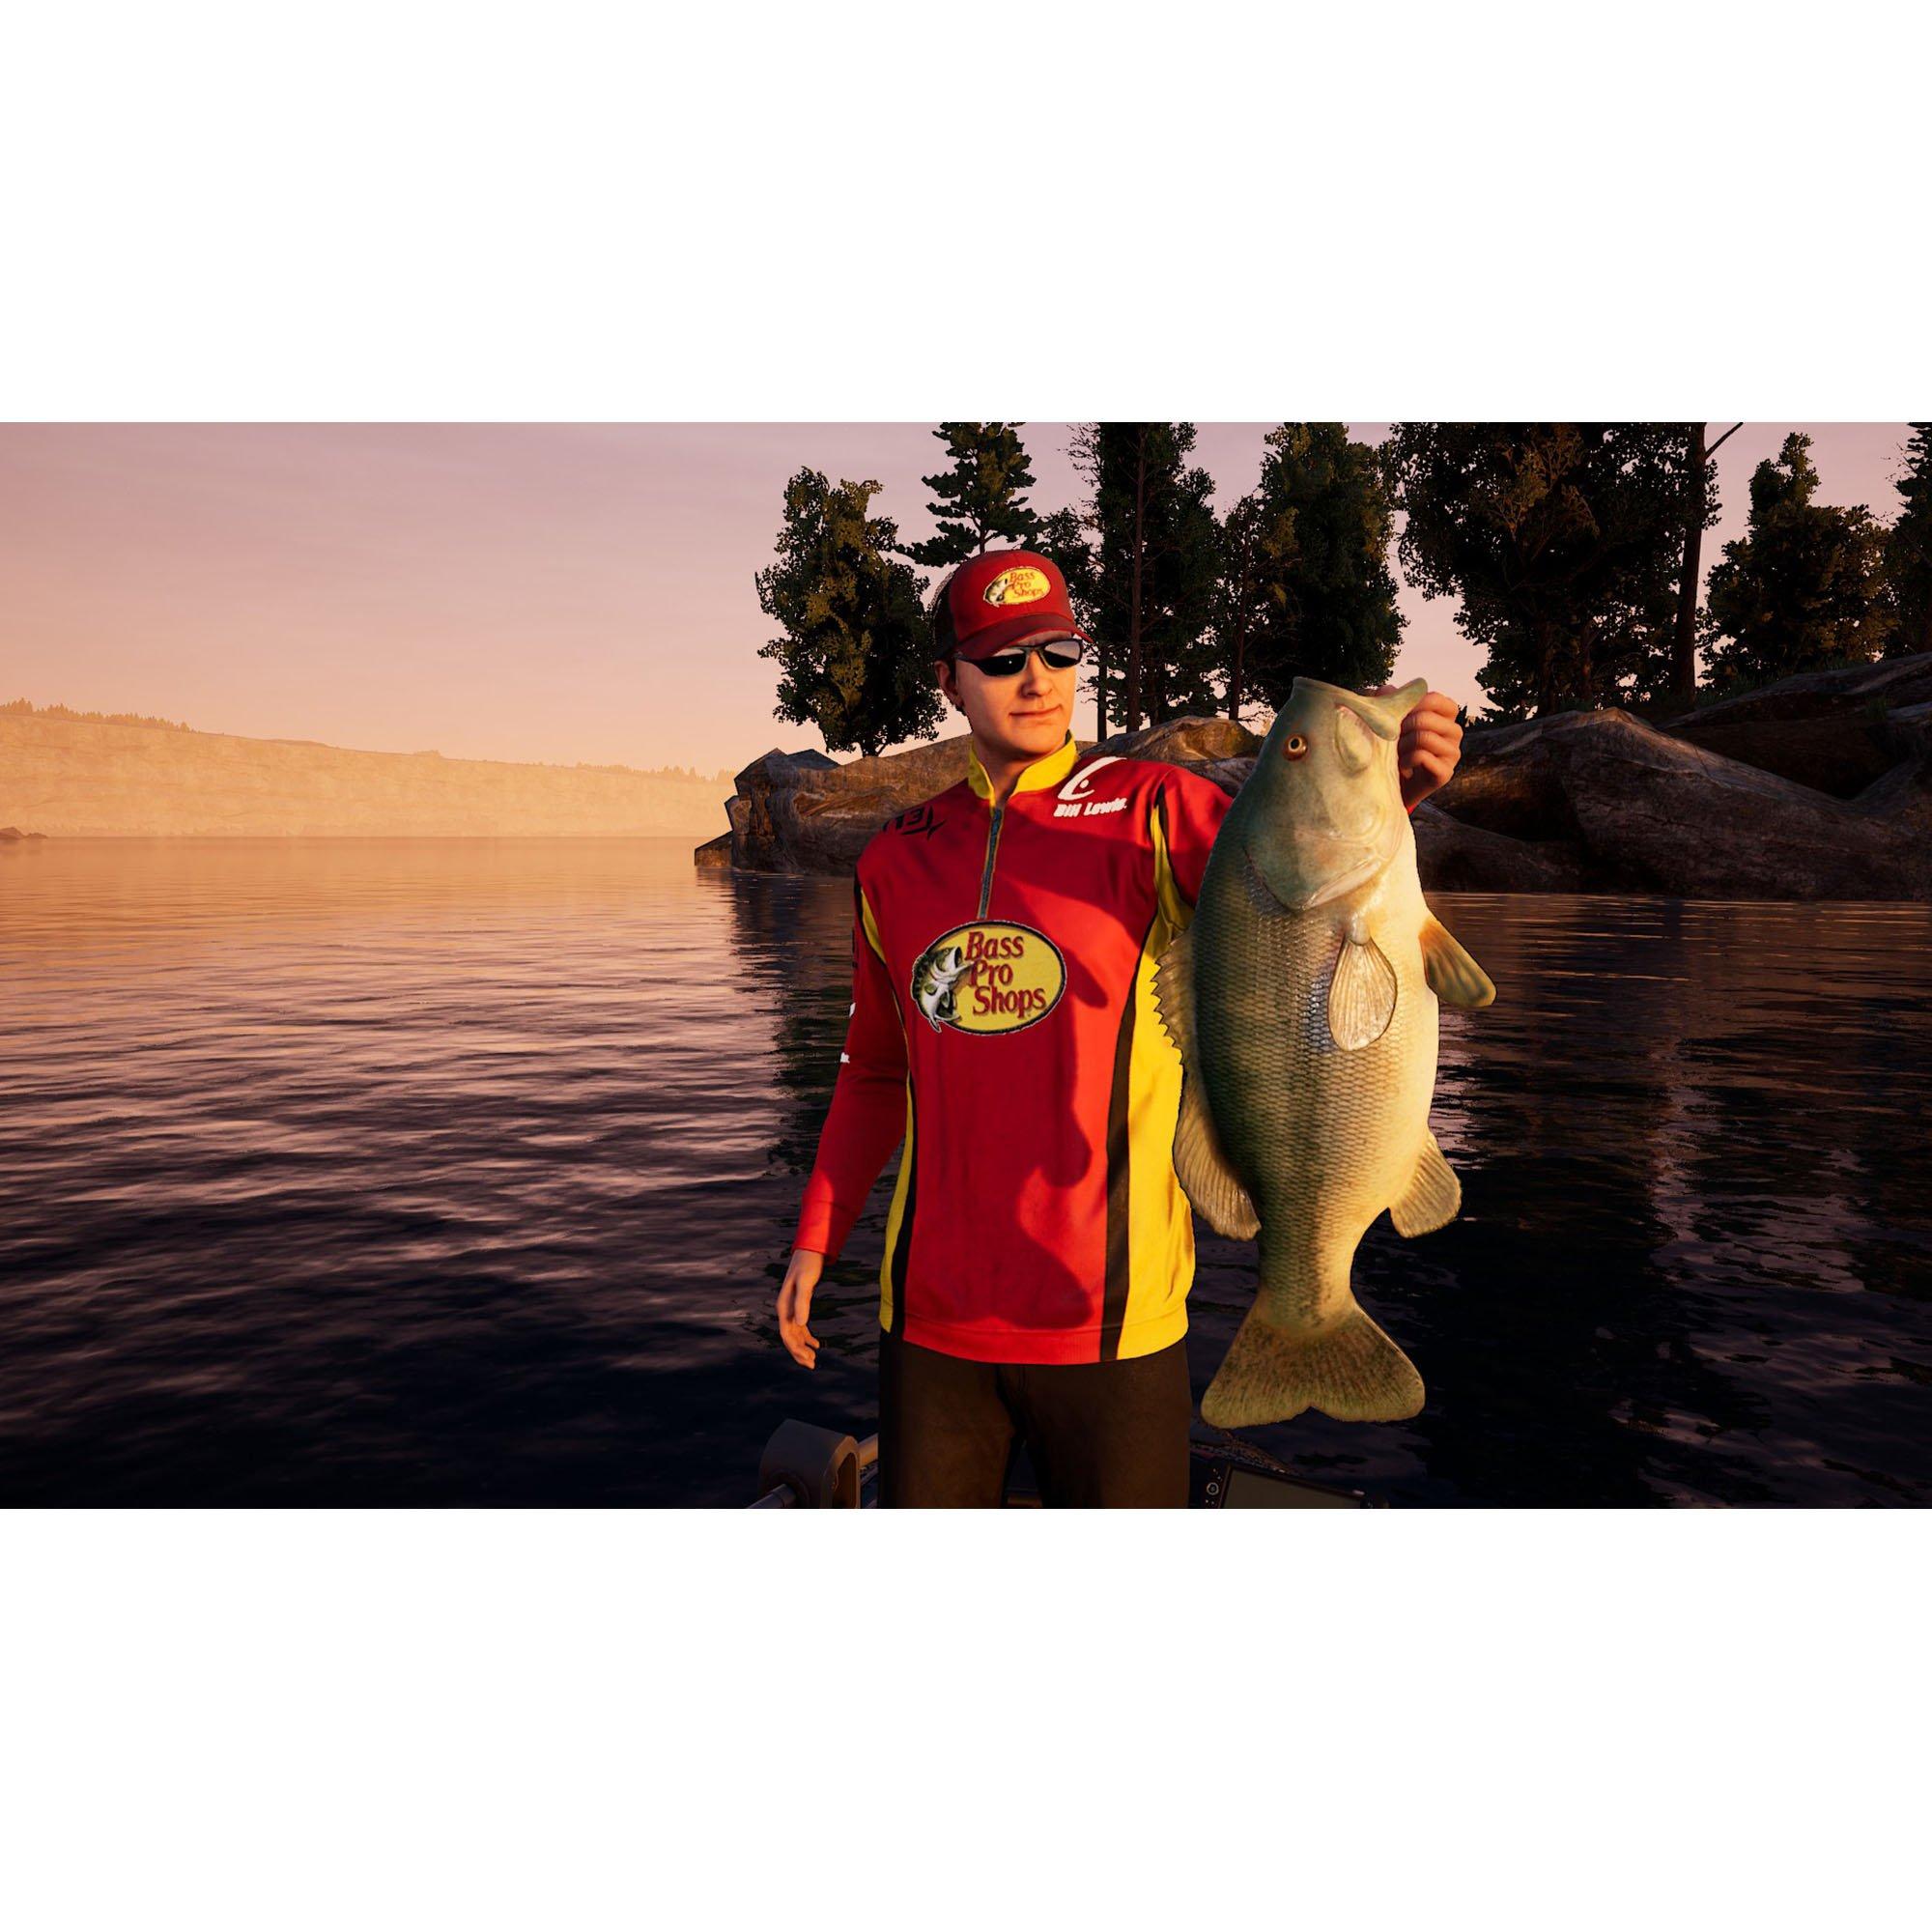 Bass Pro Shops Fishing World (輸入版:北米) - PS4